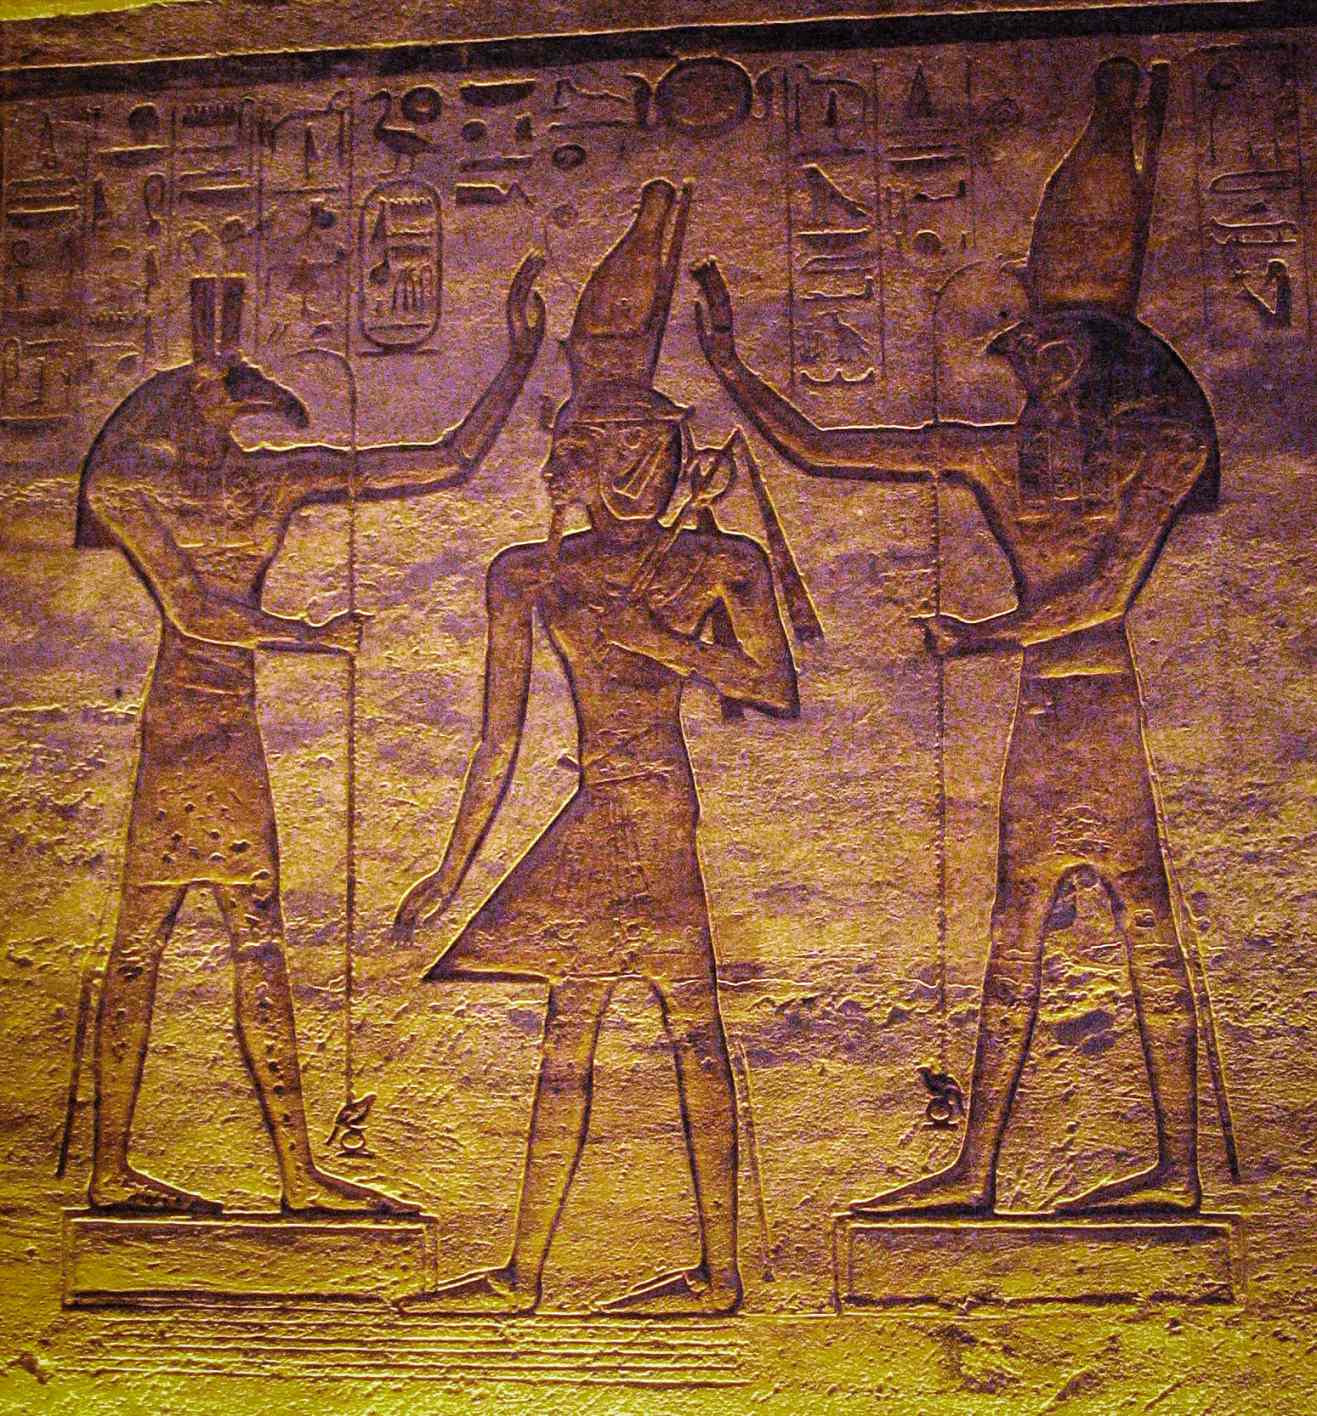 Set (Seth) និង Horus គោរព Ramesses ។ ការសិក្សាបច្ចុប្បន្នបង្ហាញថាព្រះច័ន្ទអាចត្រូវបានតំណាងដោយ Seth និងផ្កាយអថេរ Algol ដោយ Horus នៅក្នុងប្រតិទិន Cairo ។